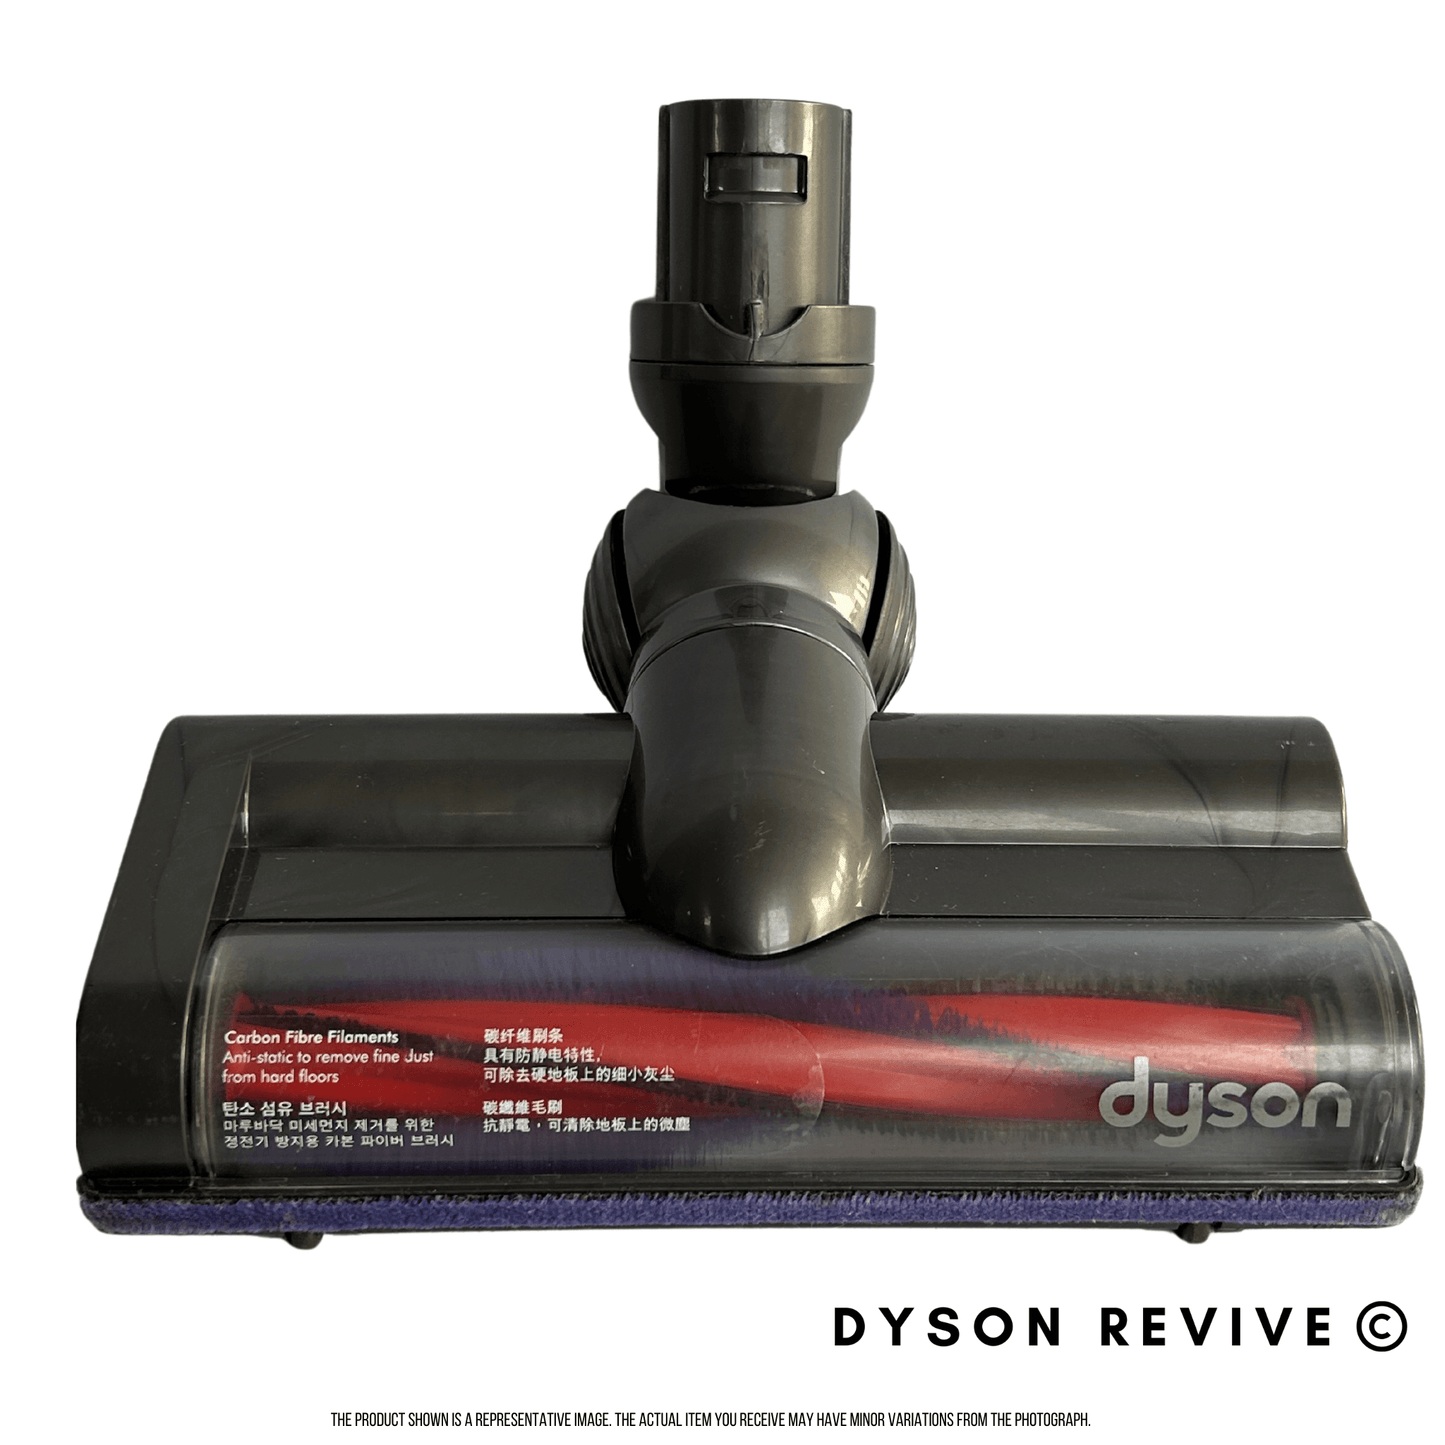 Genuine Dyson Refurbished Carbon Powerhead Motorhead For Dyson V6 Slim and Slim Origin Dyson Vacuums - Dyson Revive